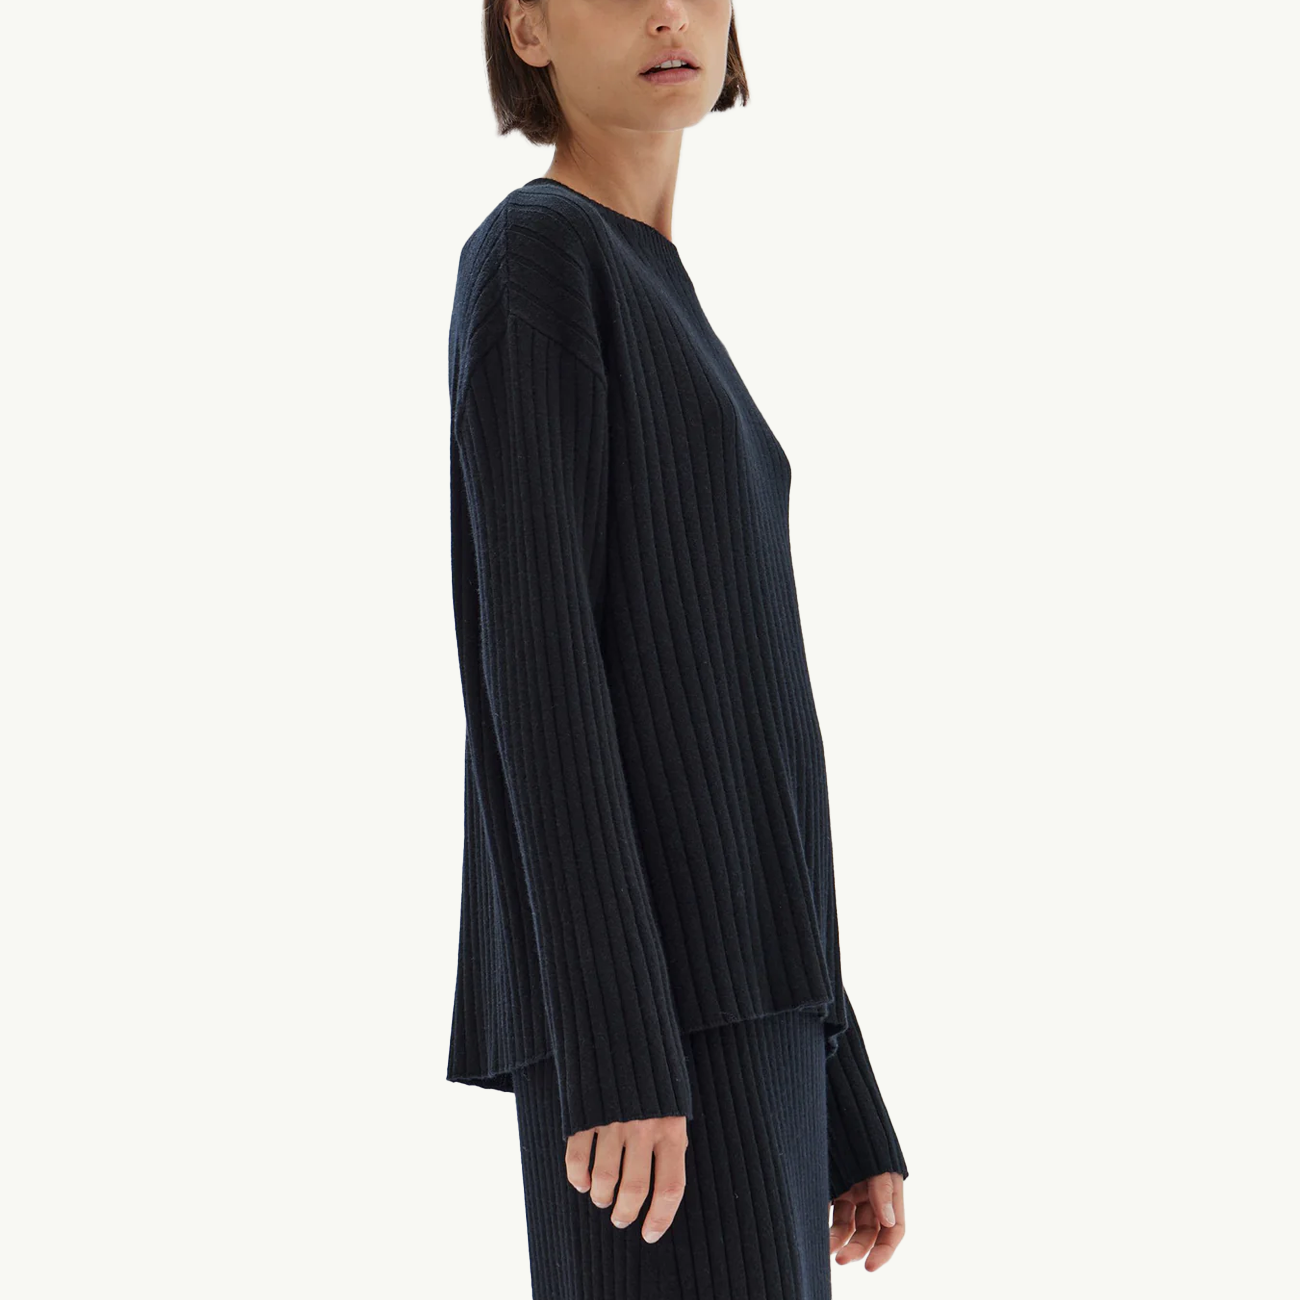 Wool Cashmere Rib Long Sleeve Top - Black